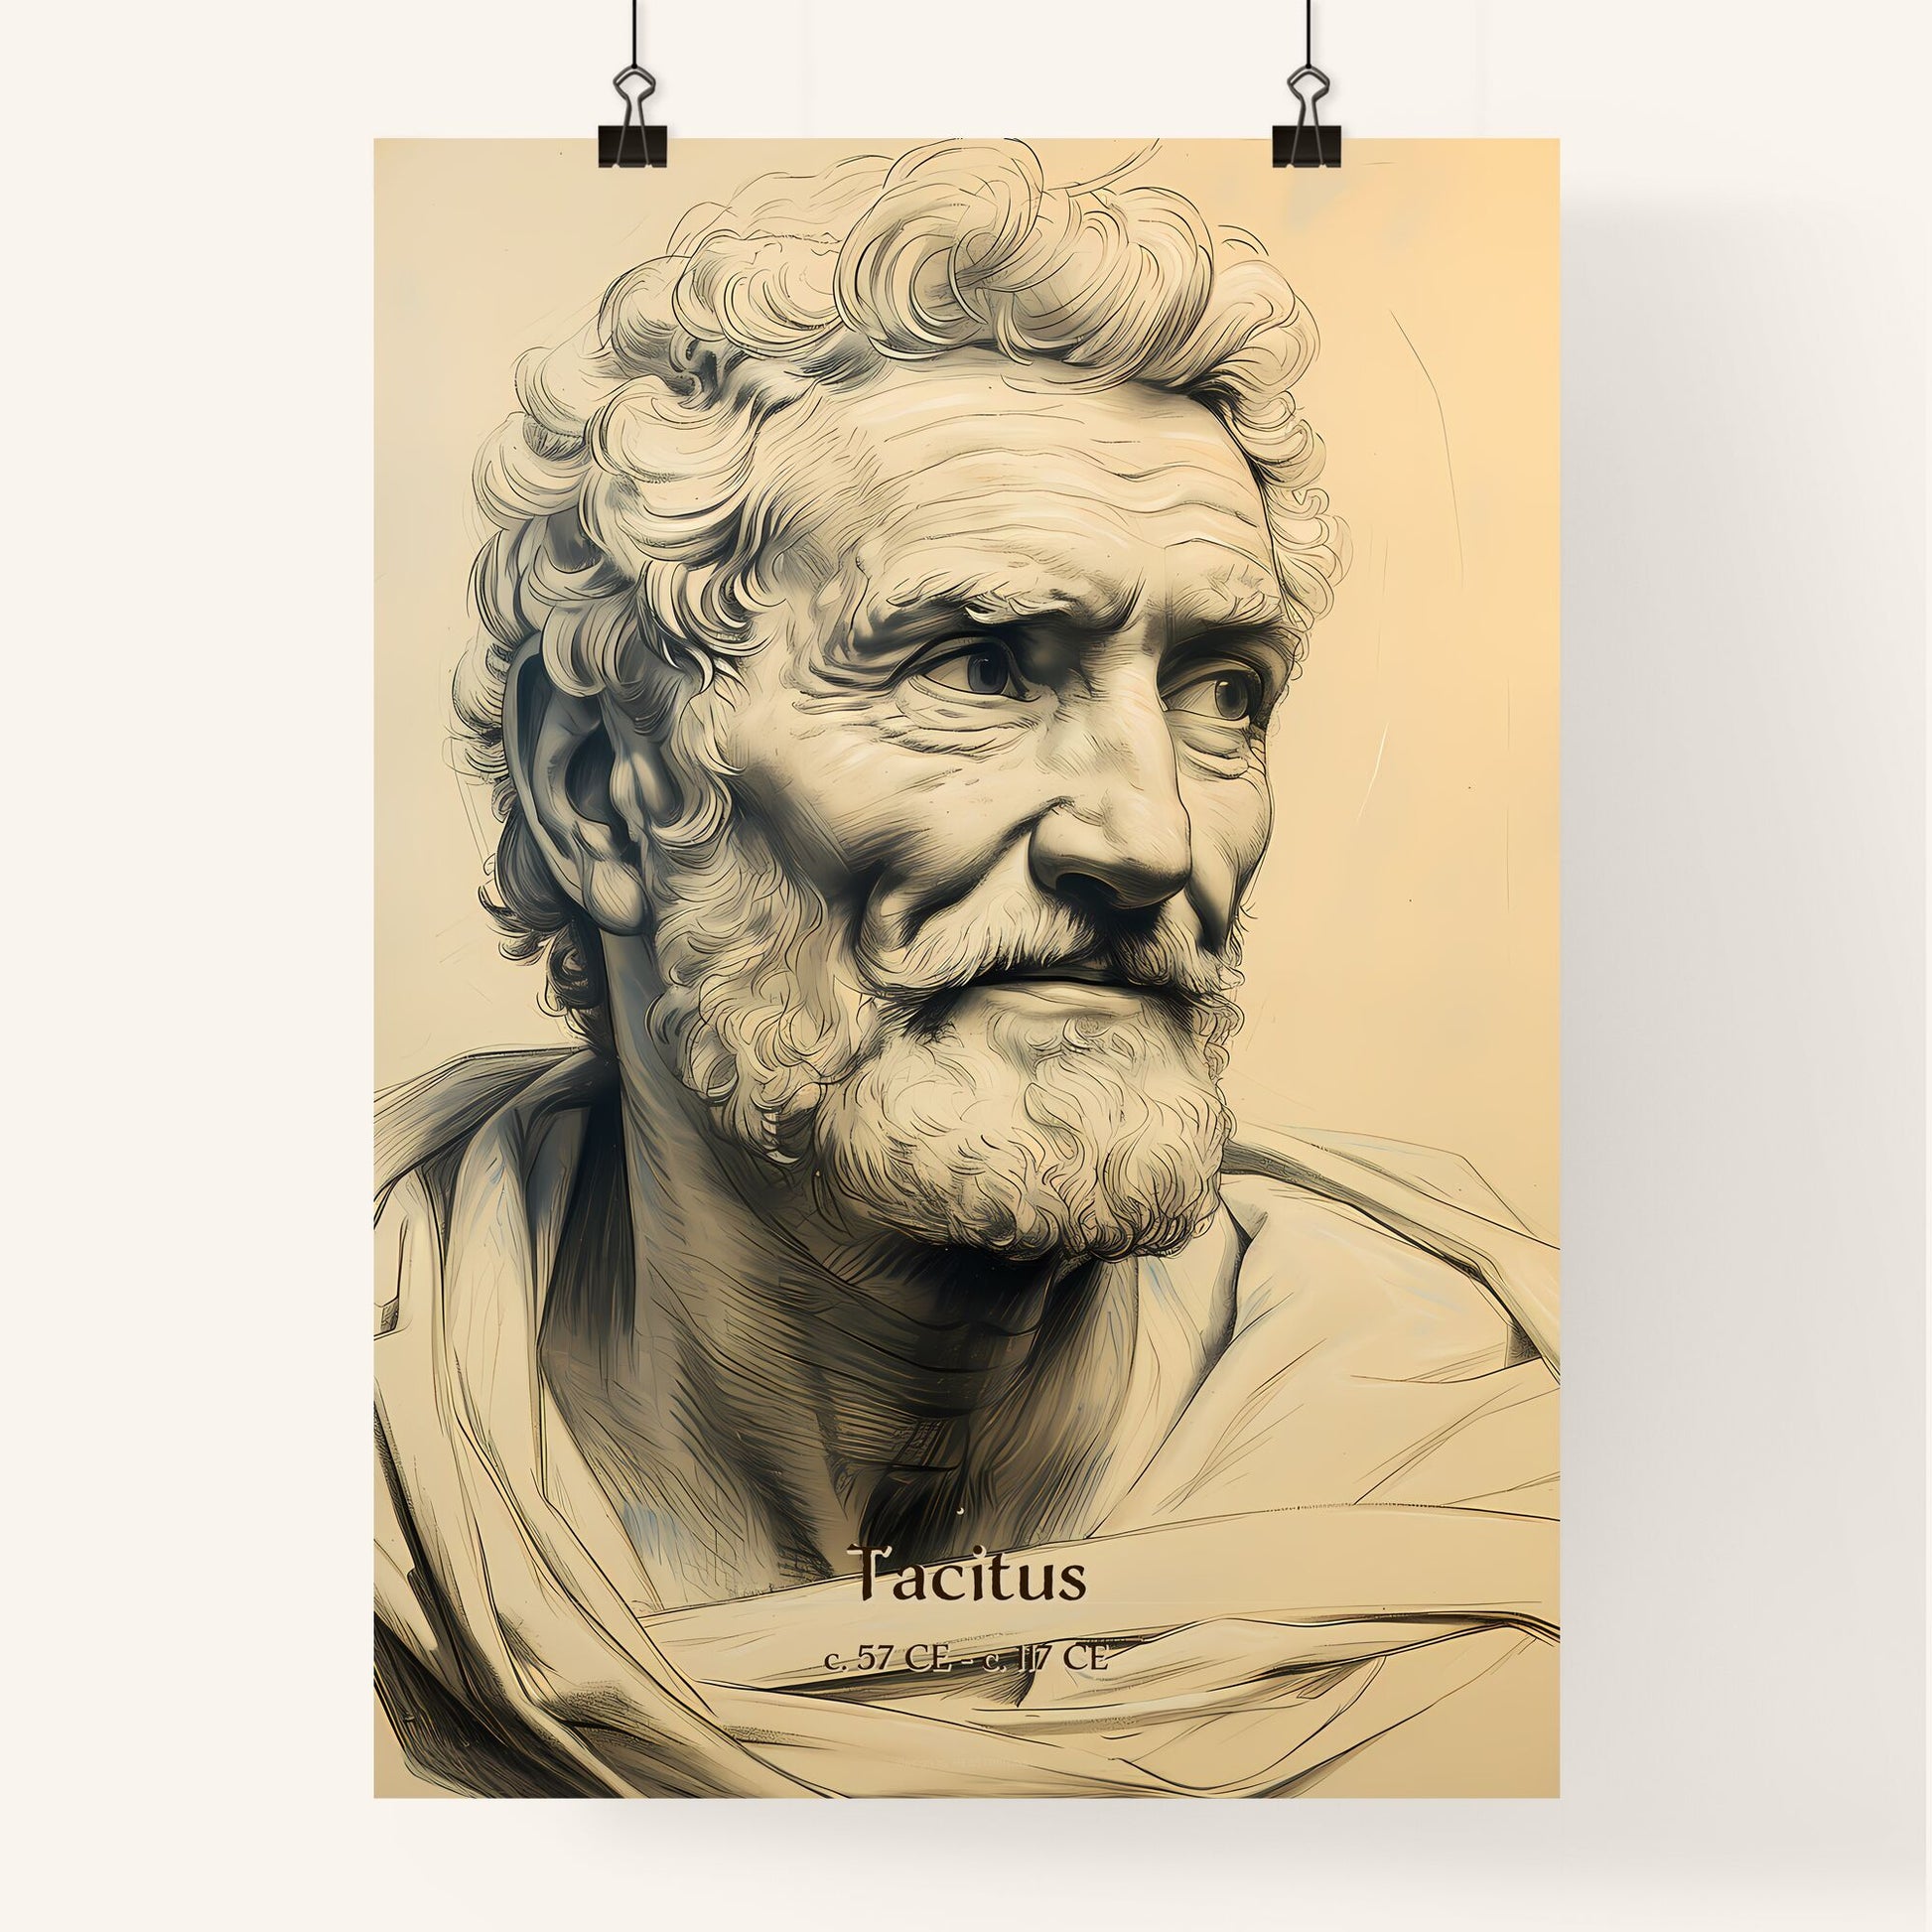 Tacitus, c. 57 CE - c. 117 CE, A Poster of a drawing of a man Default Title